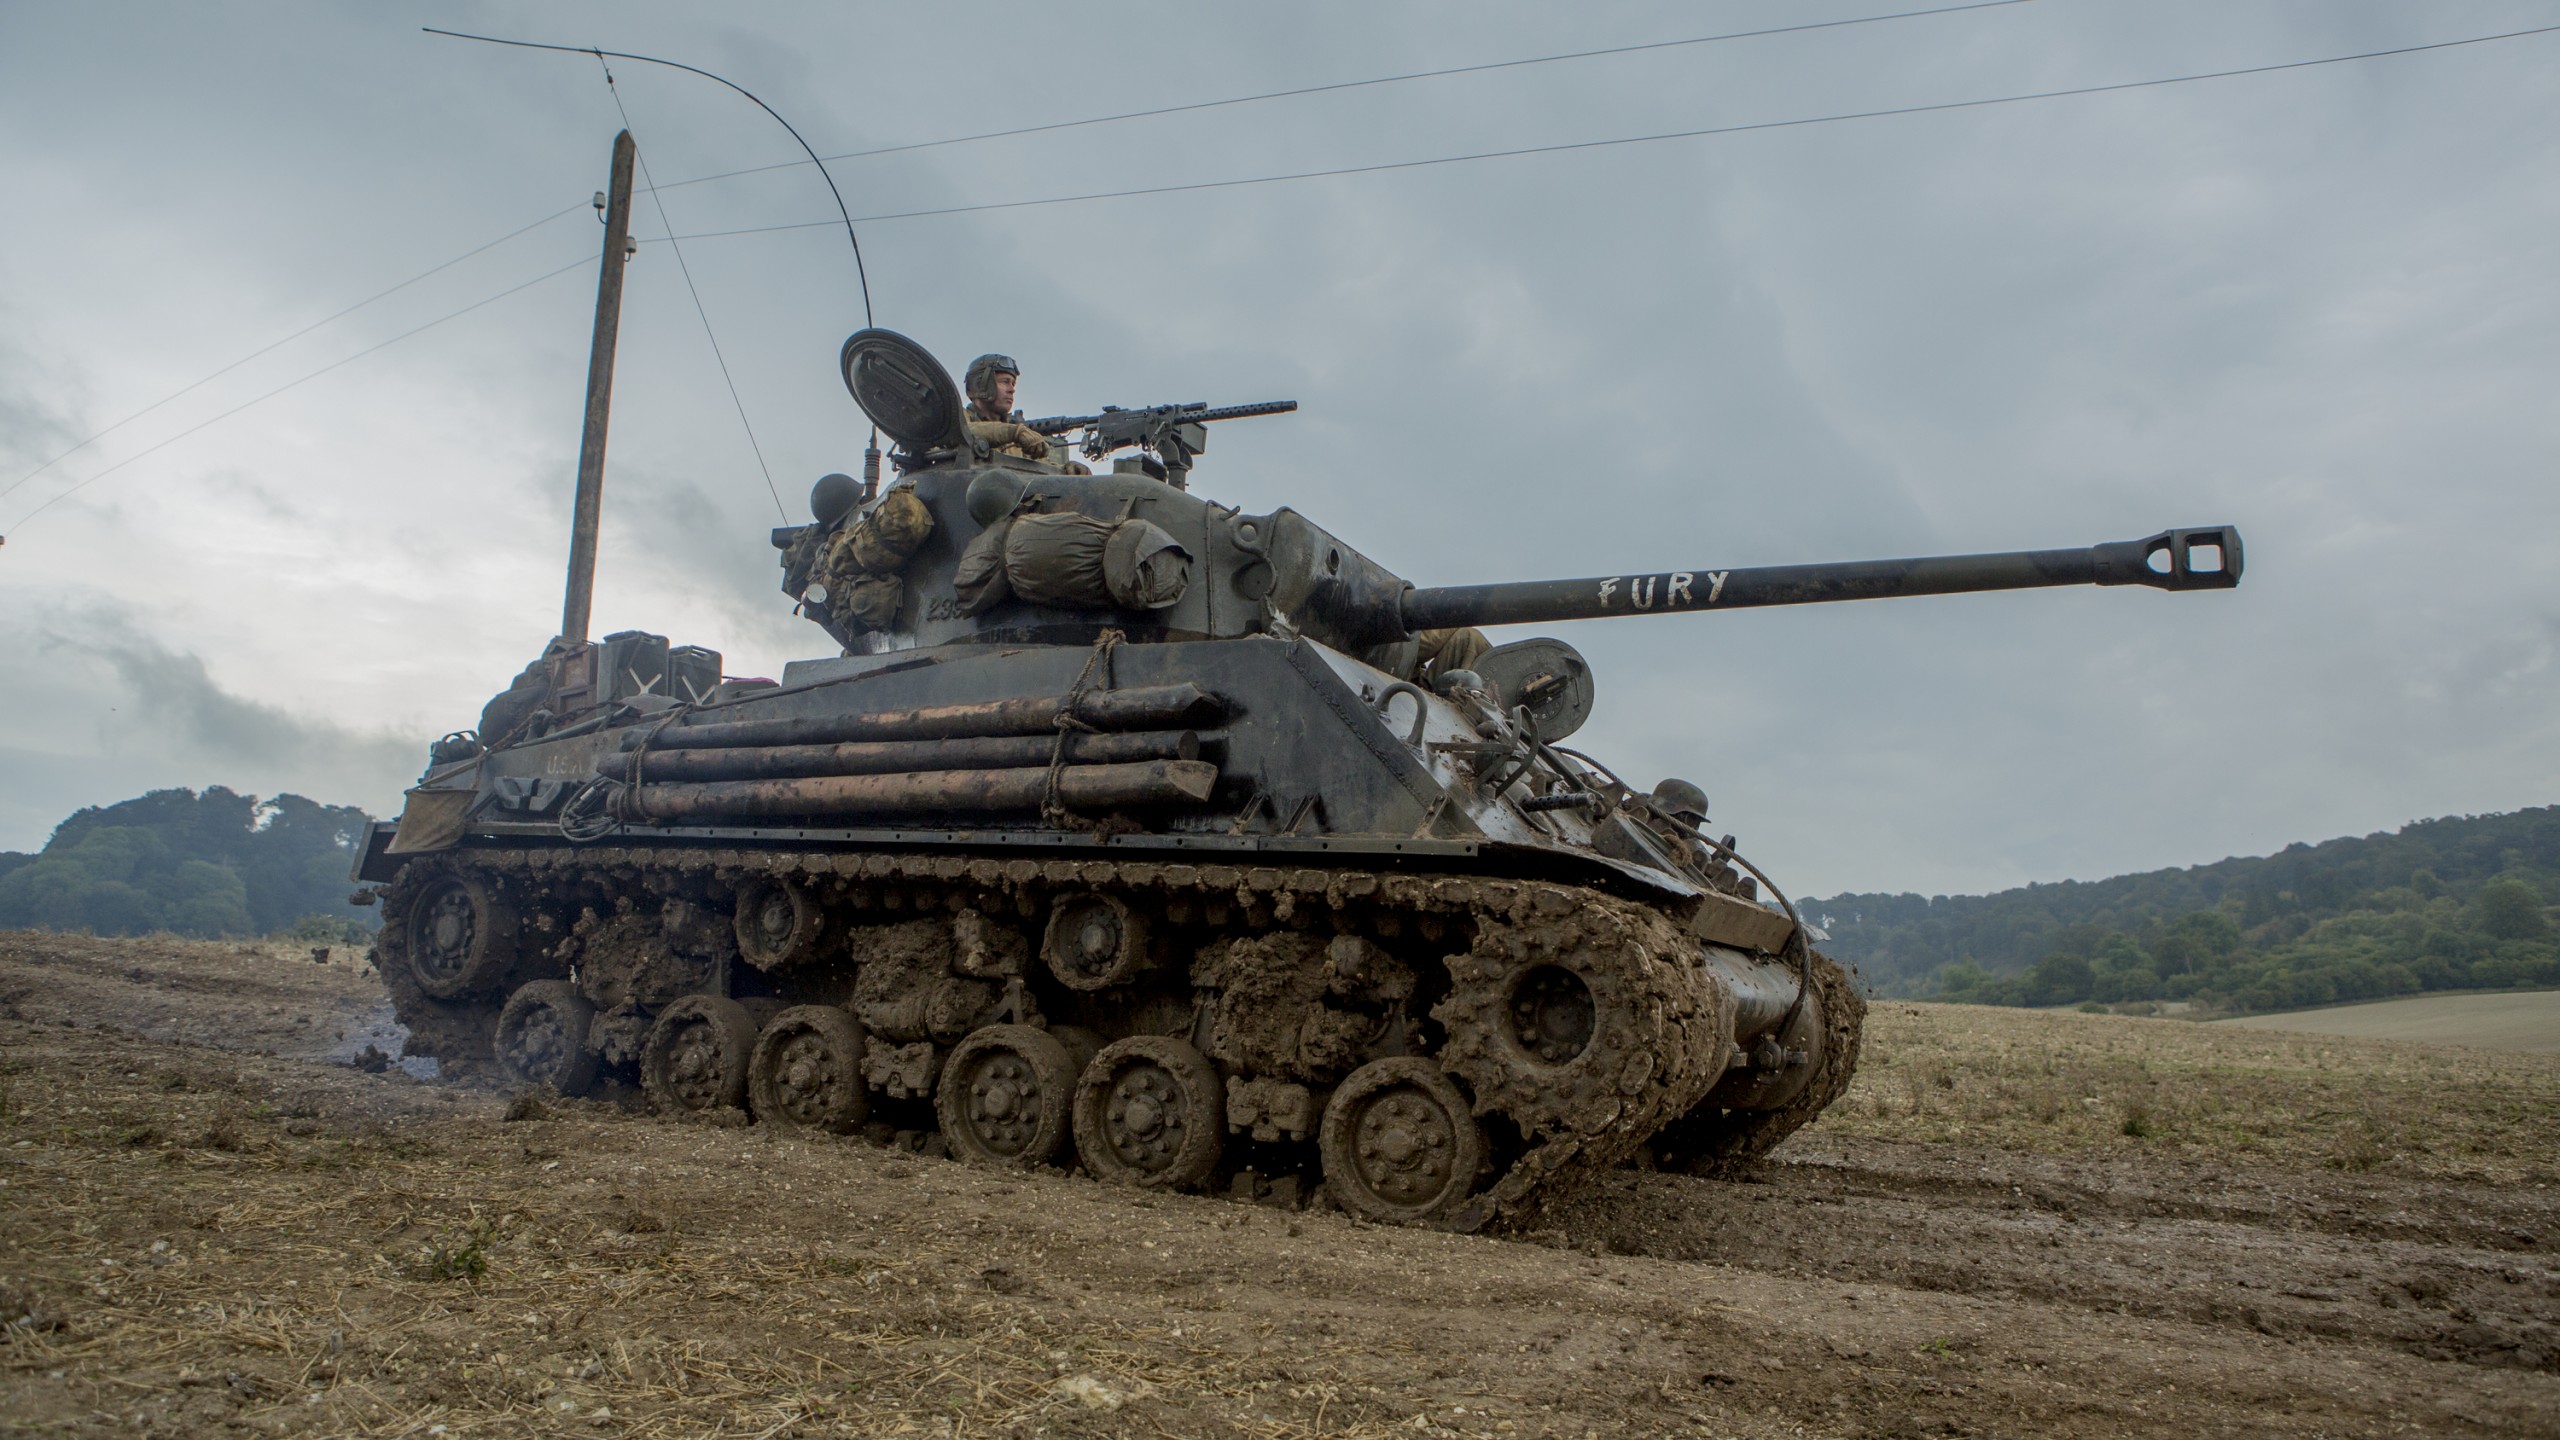 medium wallpaper,combat vehicle,tank,self propelled artillery,military vehicle,vehicle